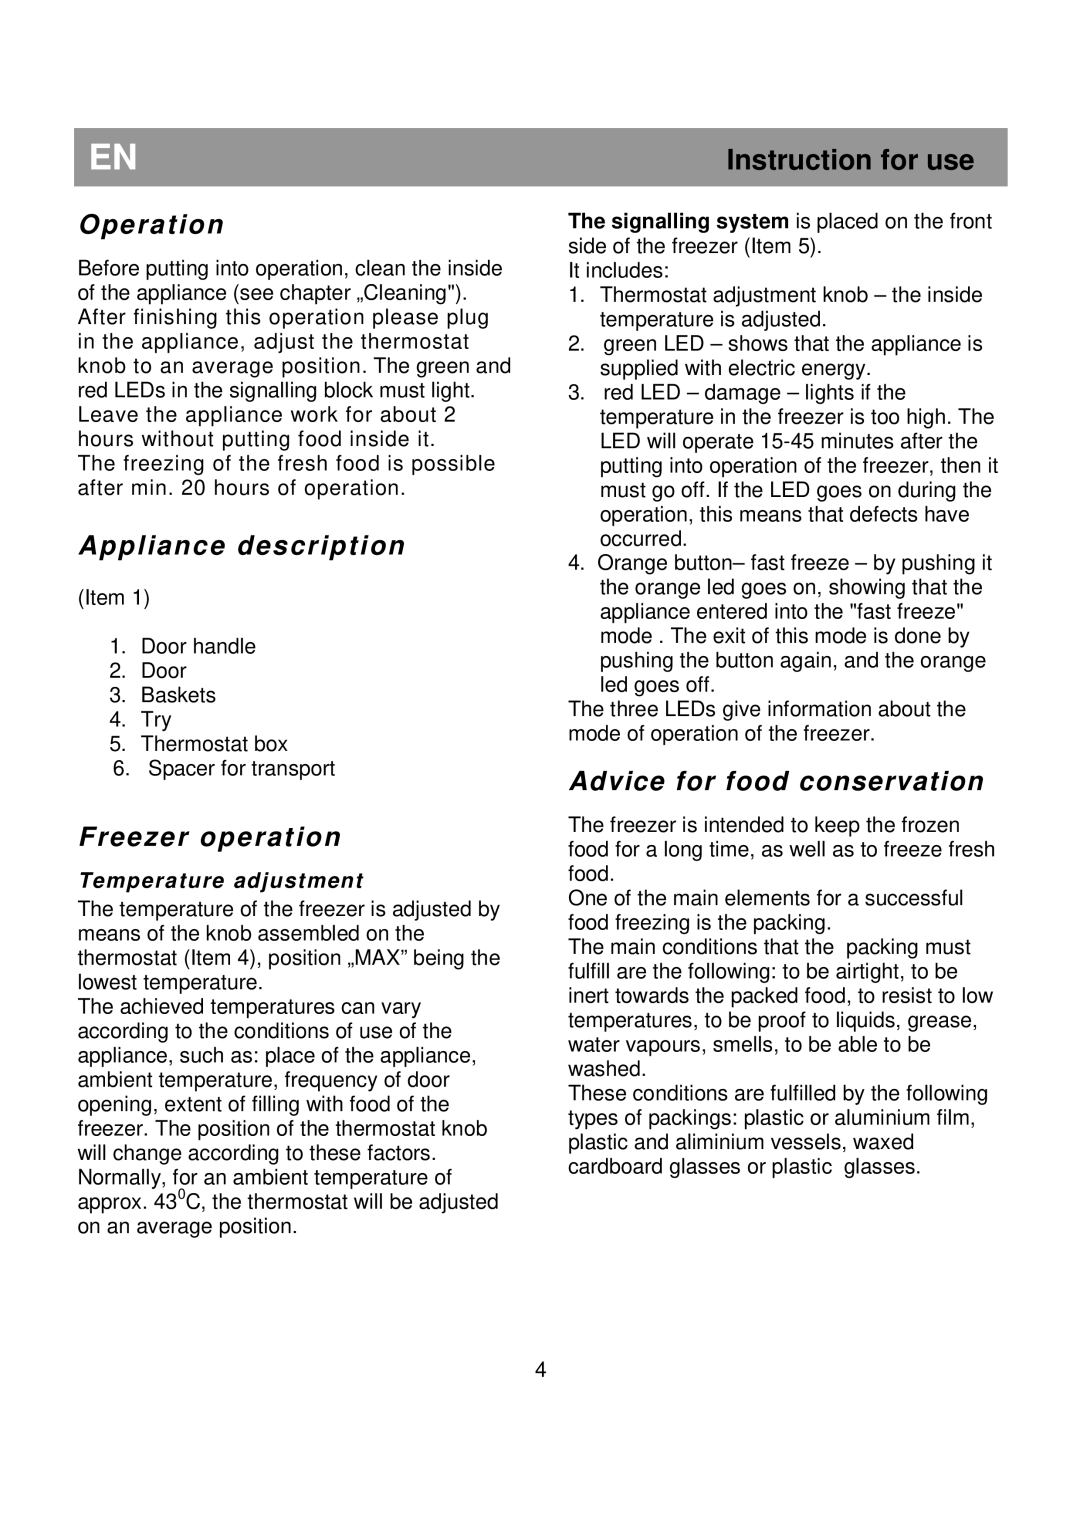 Beko HSA 20520 manual O p e r a t io n, Appliance description, Freezer operation, Advice for food conservation 